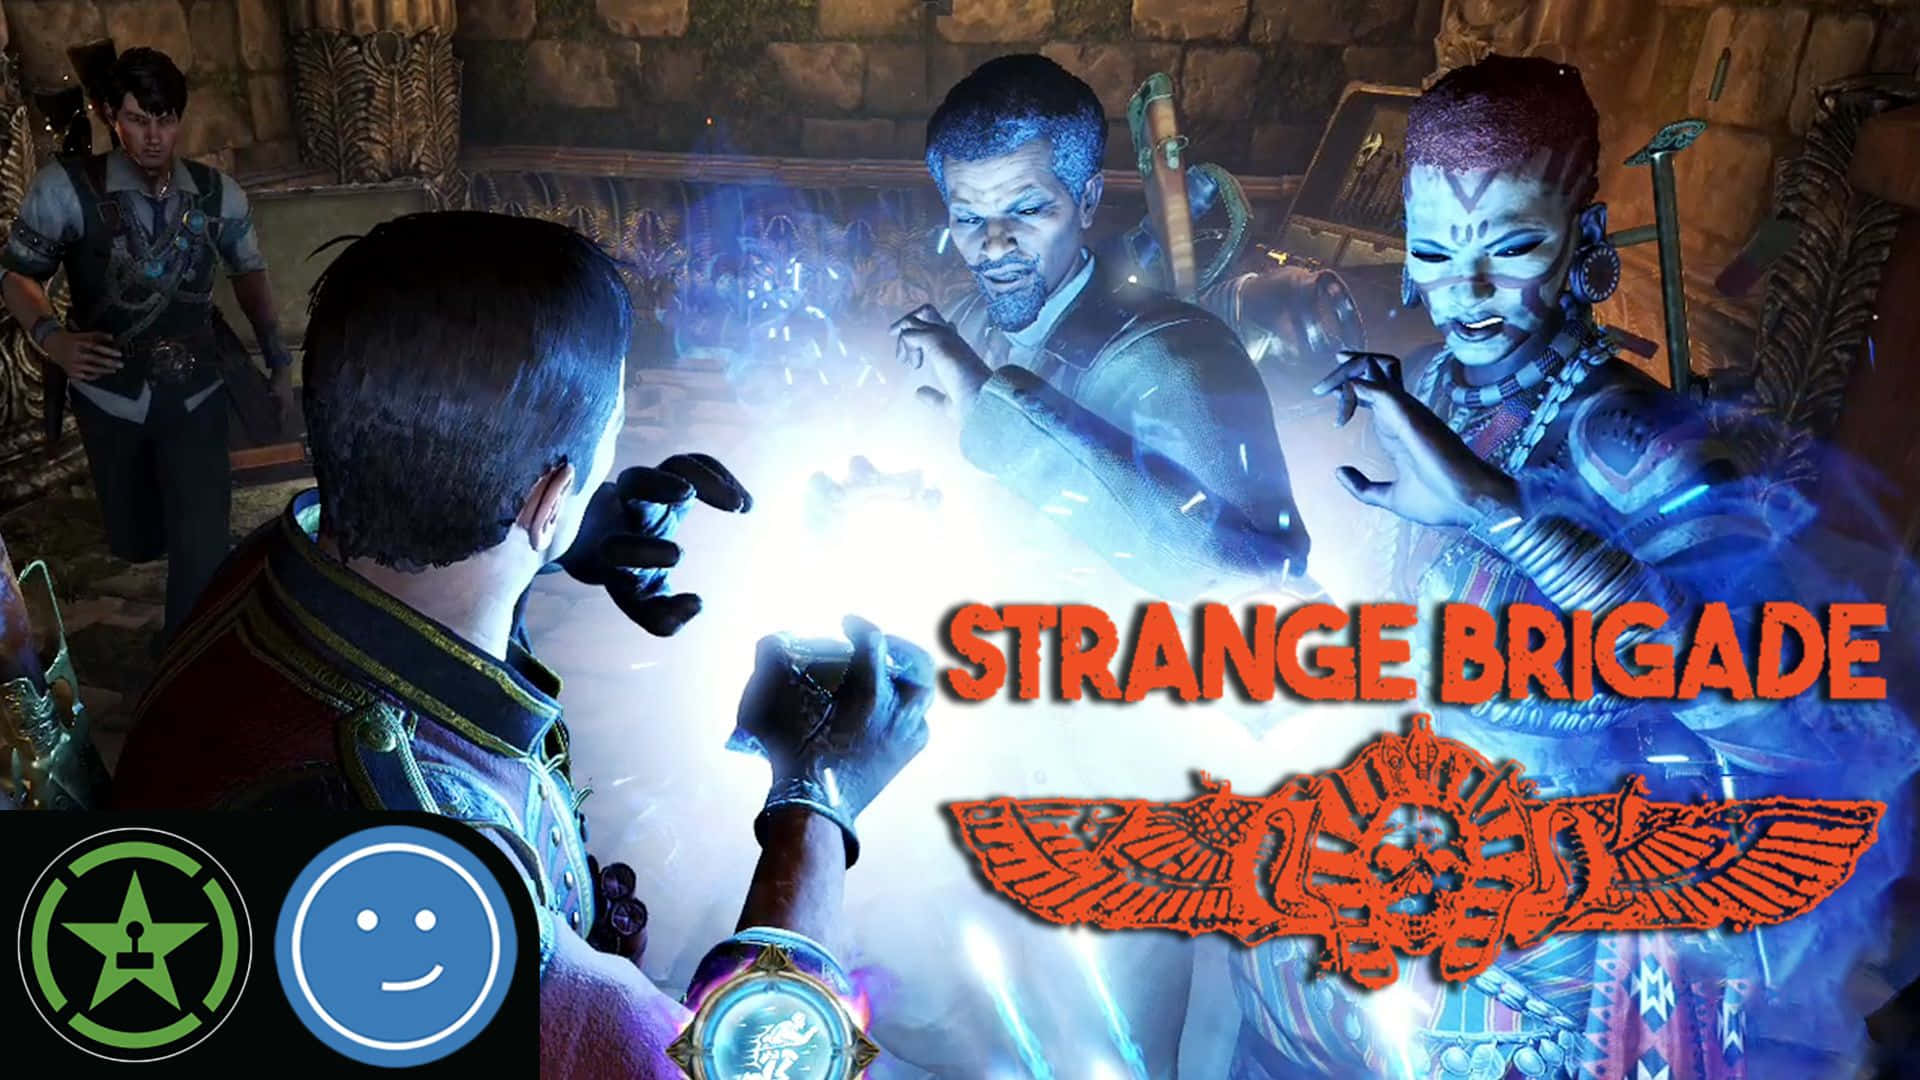 Strangebrigade - Un Gioco Con Un Tema Misterioso